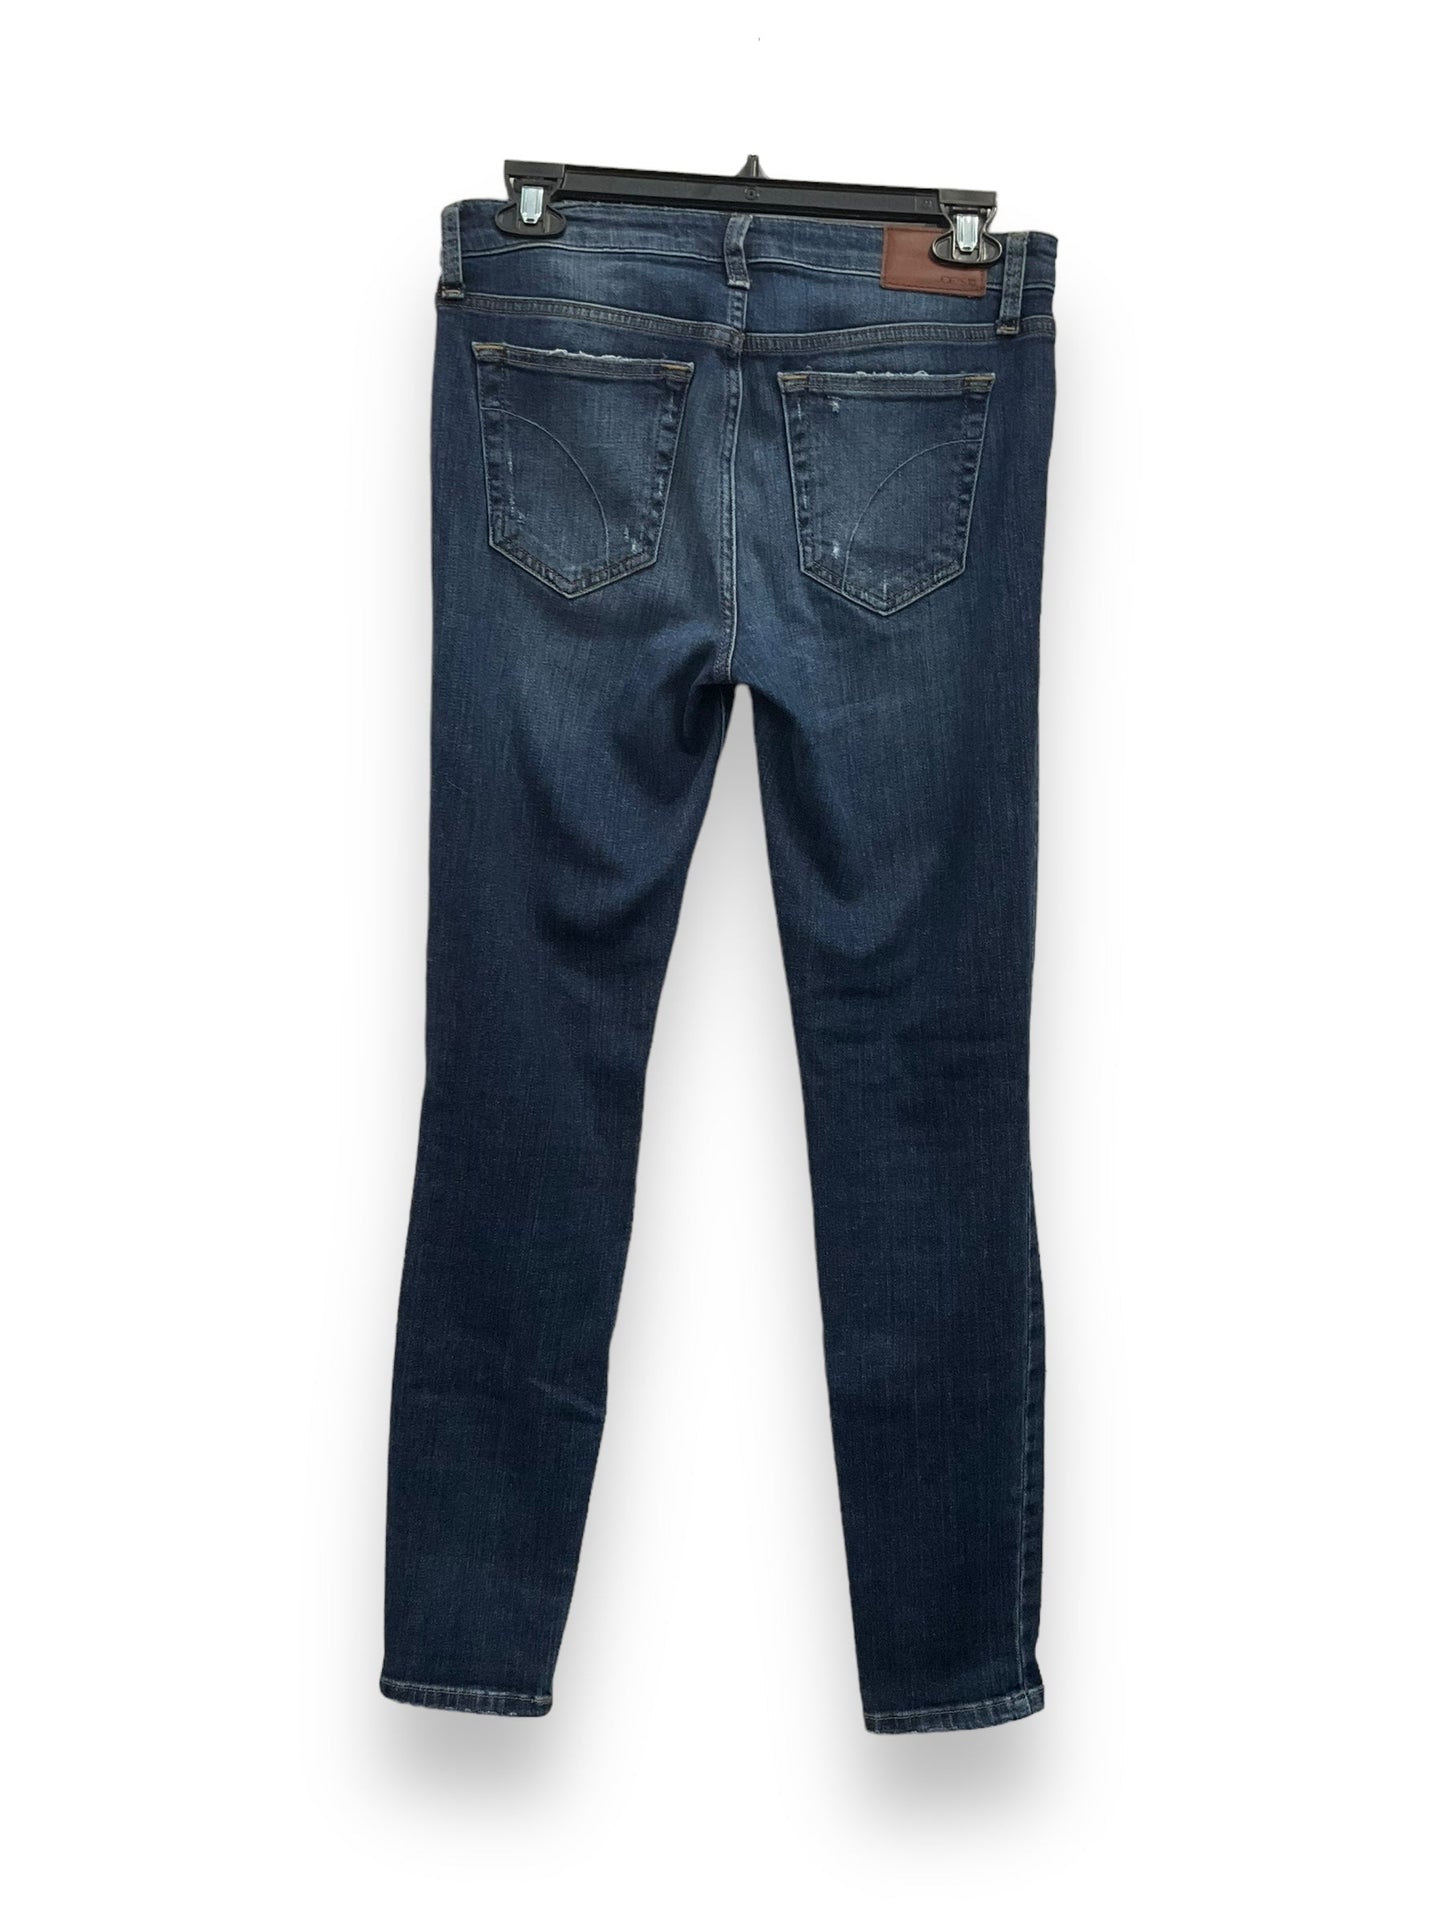 Blue Denim Jeans Straight Joes Jeans, Size 6